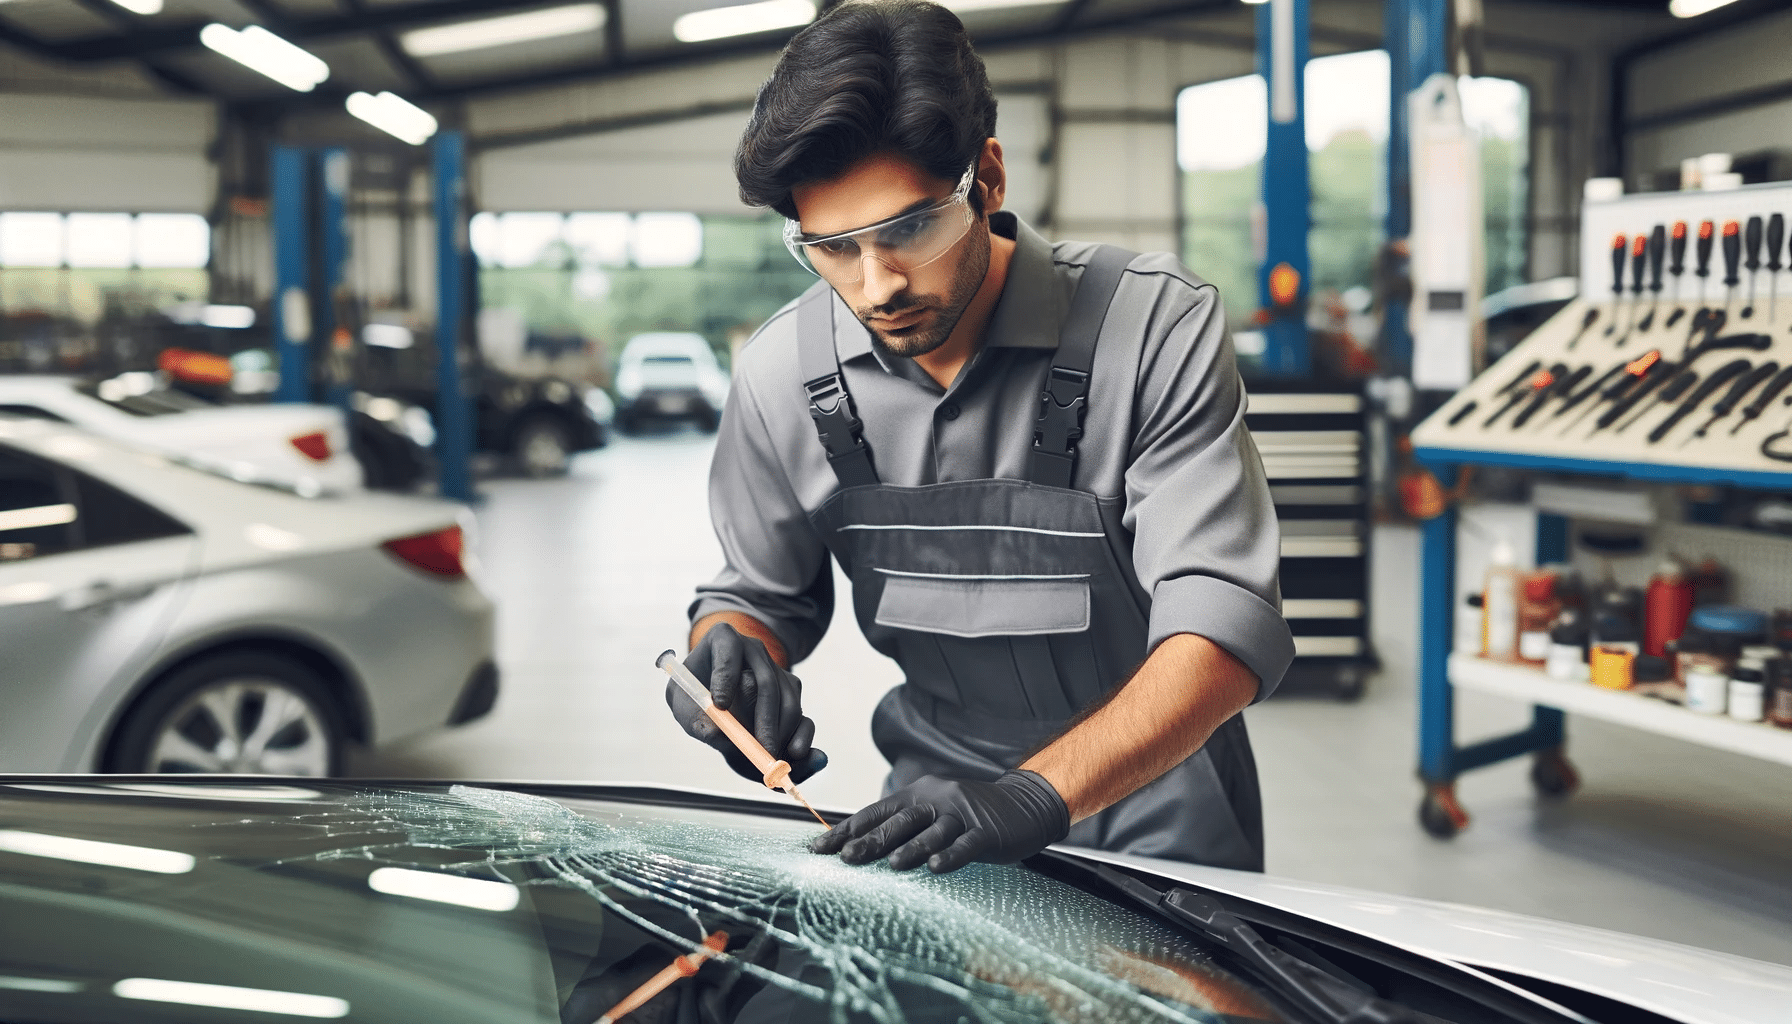 A-professional-mechanic-in-a-clean-well-organized-auto-repair-shop